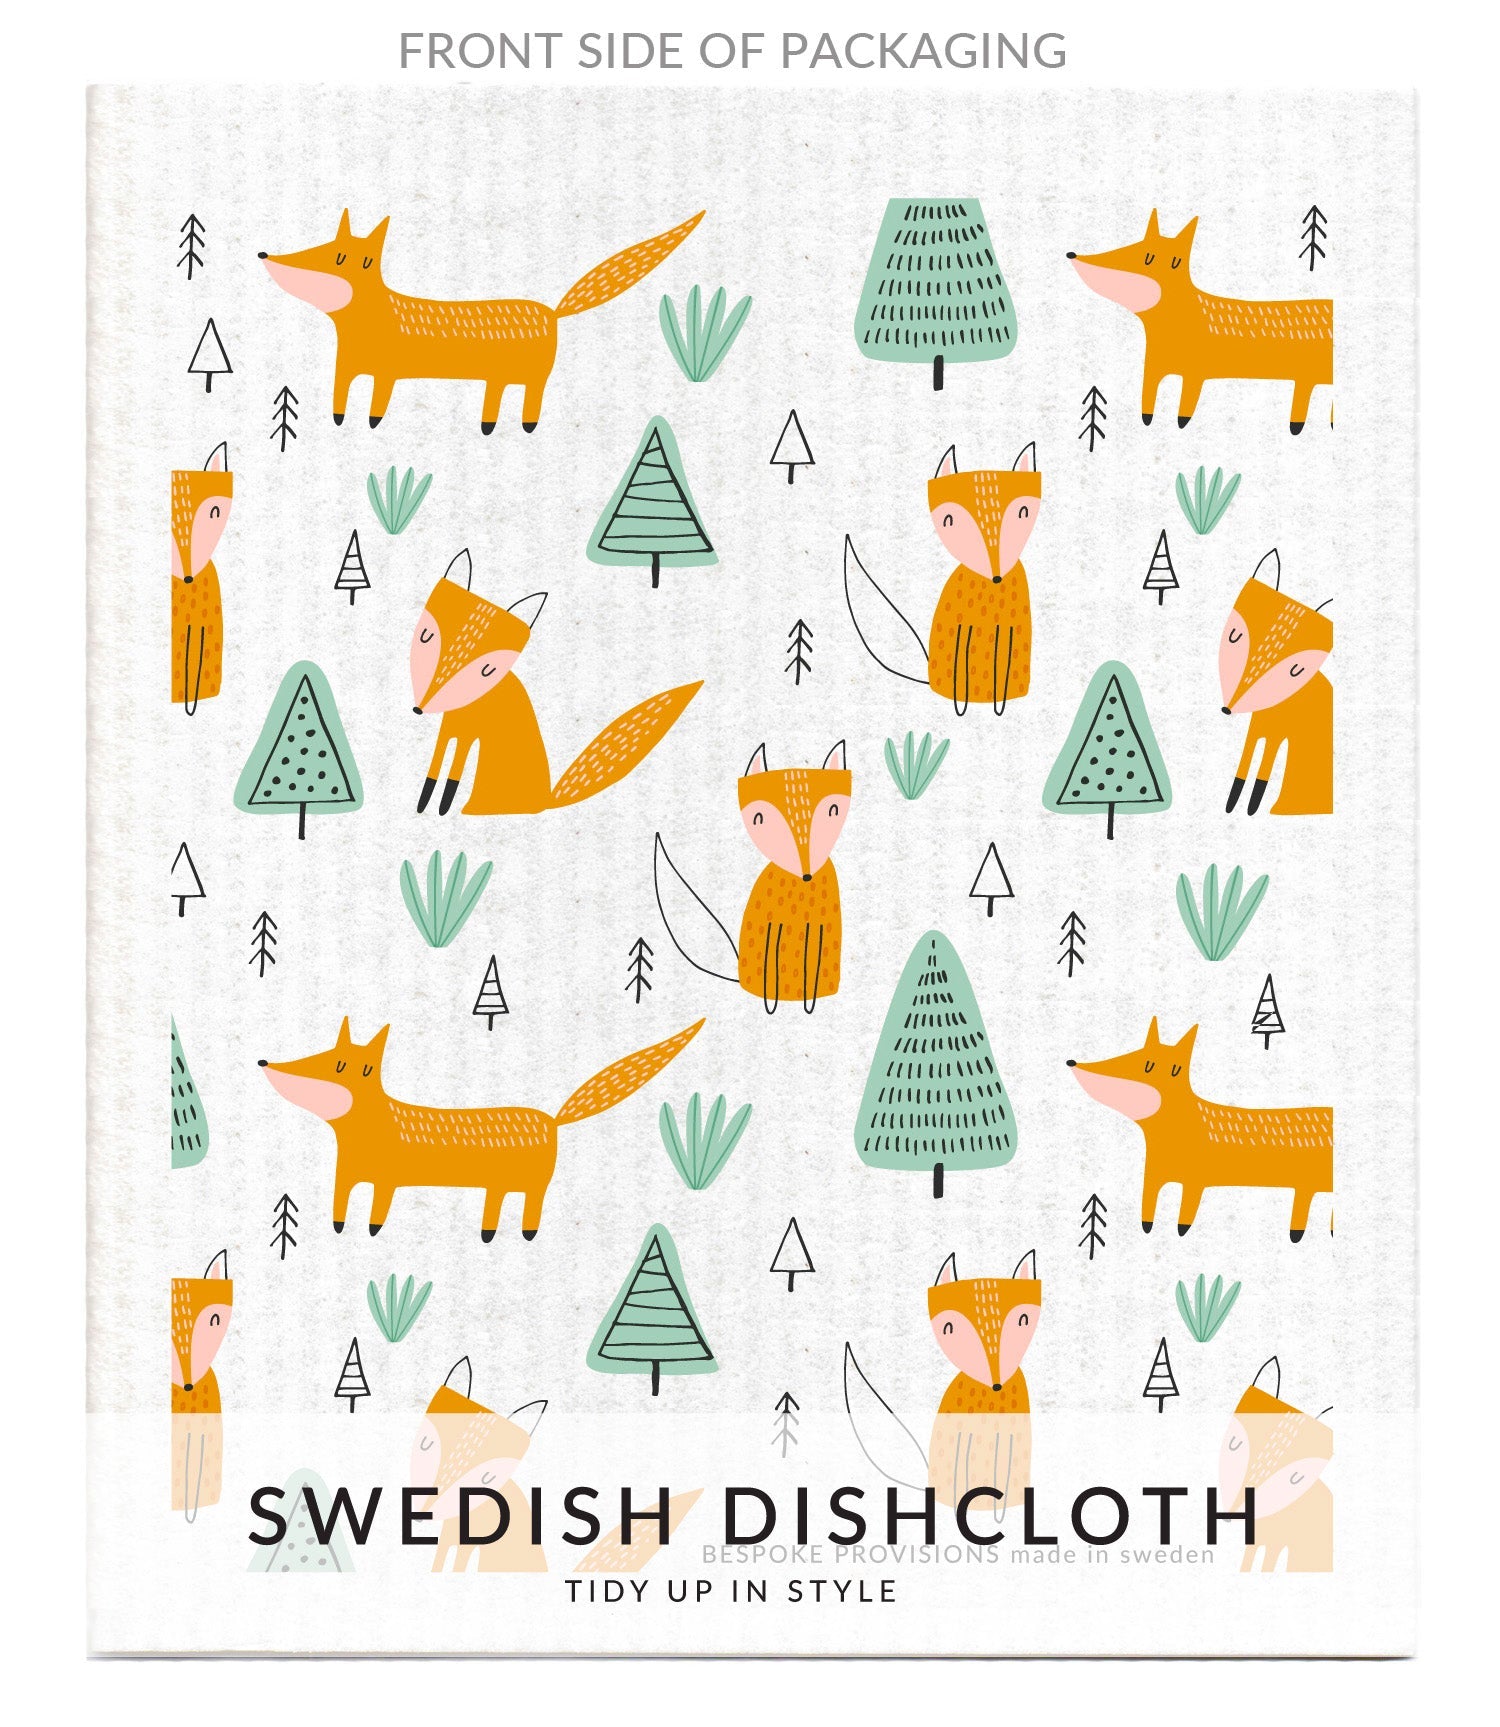 Into the Woods Swedish Dishcloth Set of 3 - BESPOKE PROVISIONS